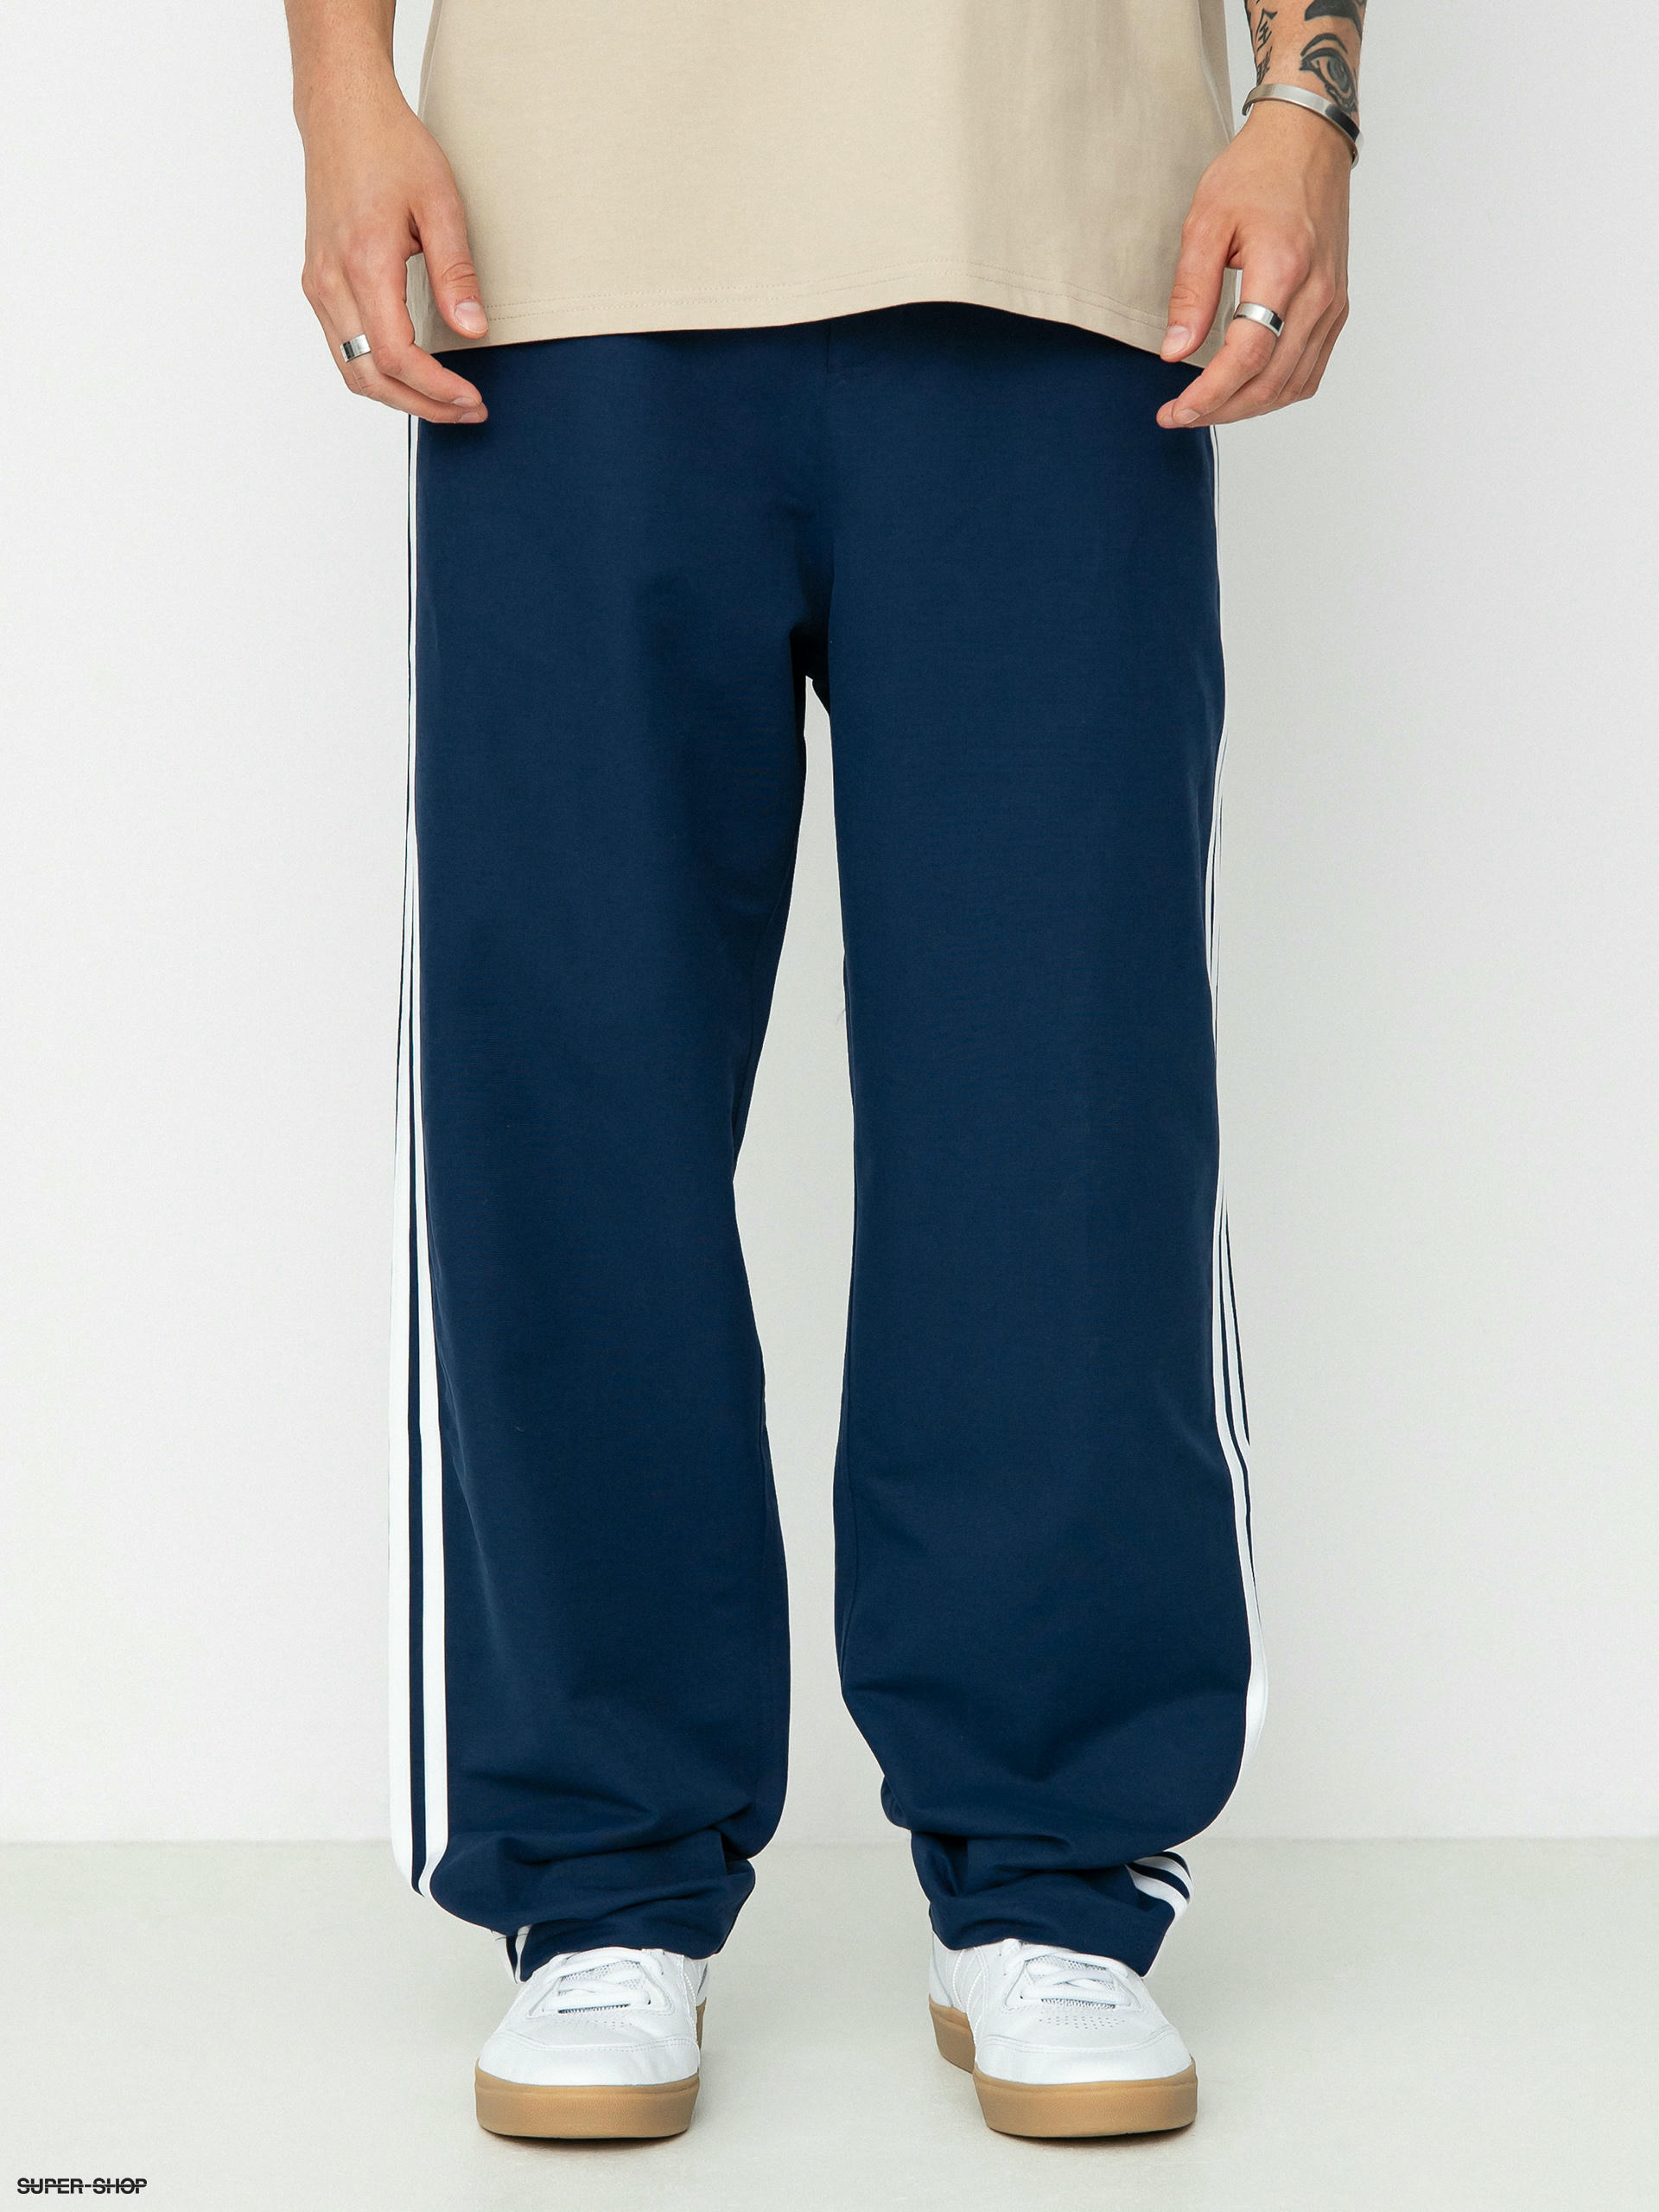 Adidas Youth 3 Stripes Loose Sweat Track Pants Navy White Size 7 | eBay